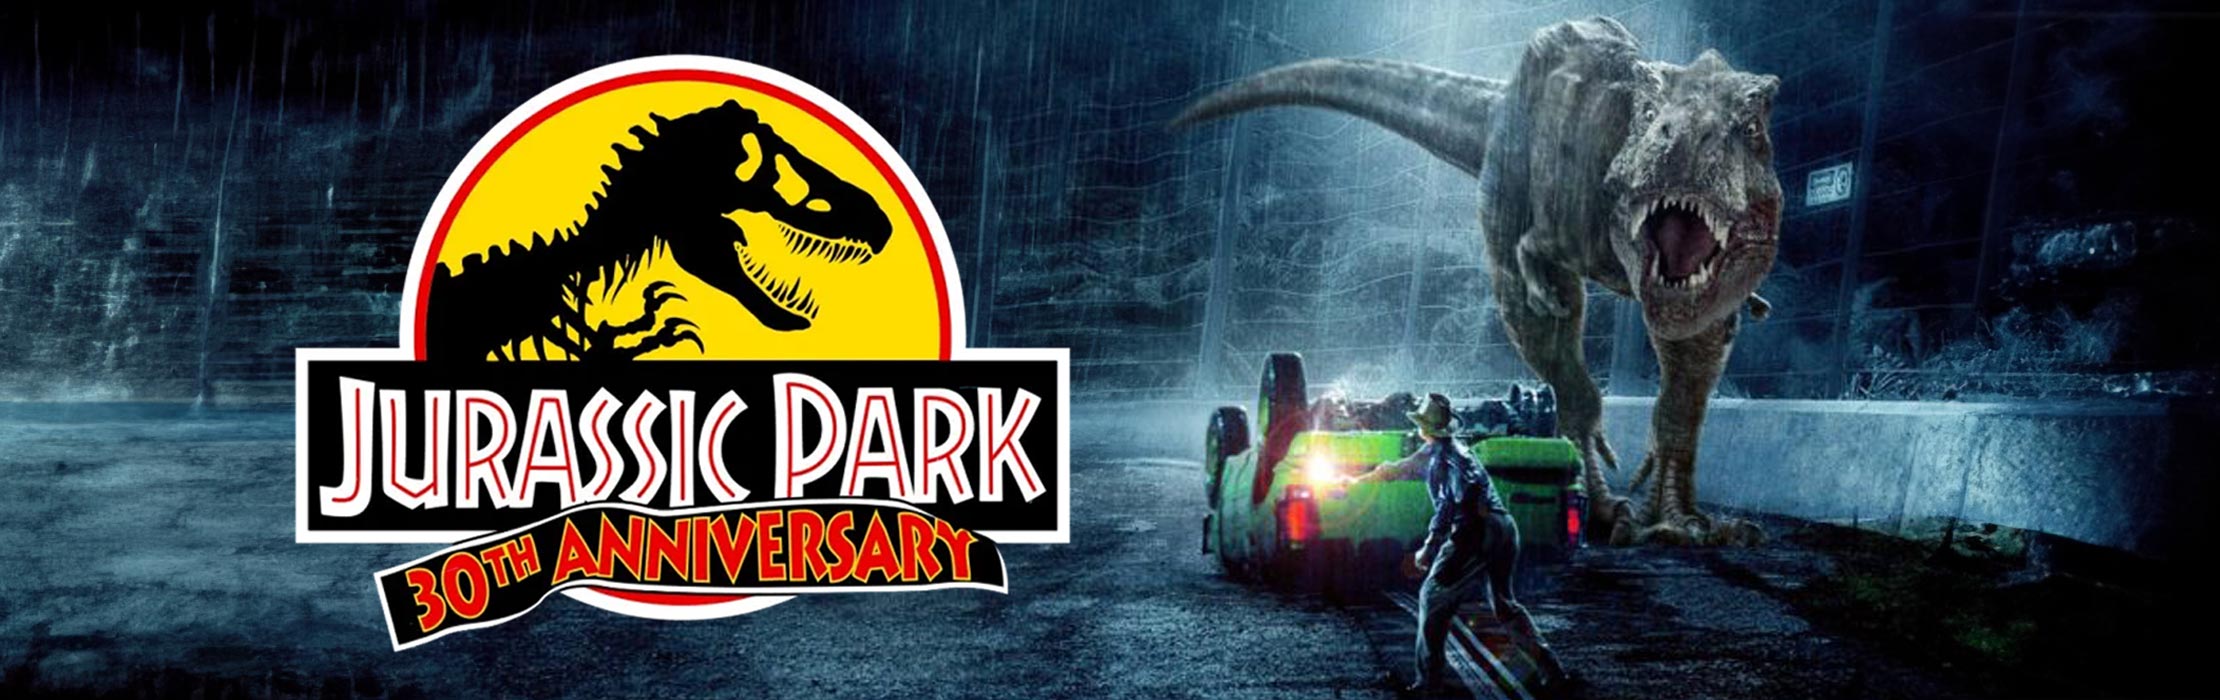 Jurassic Park 30